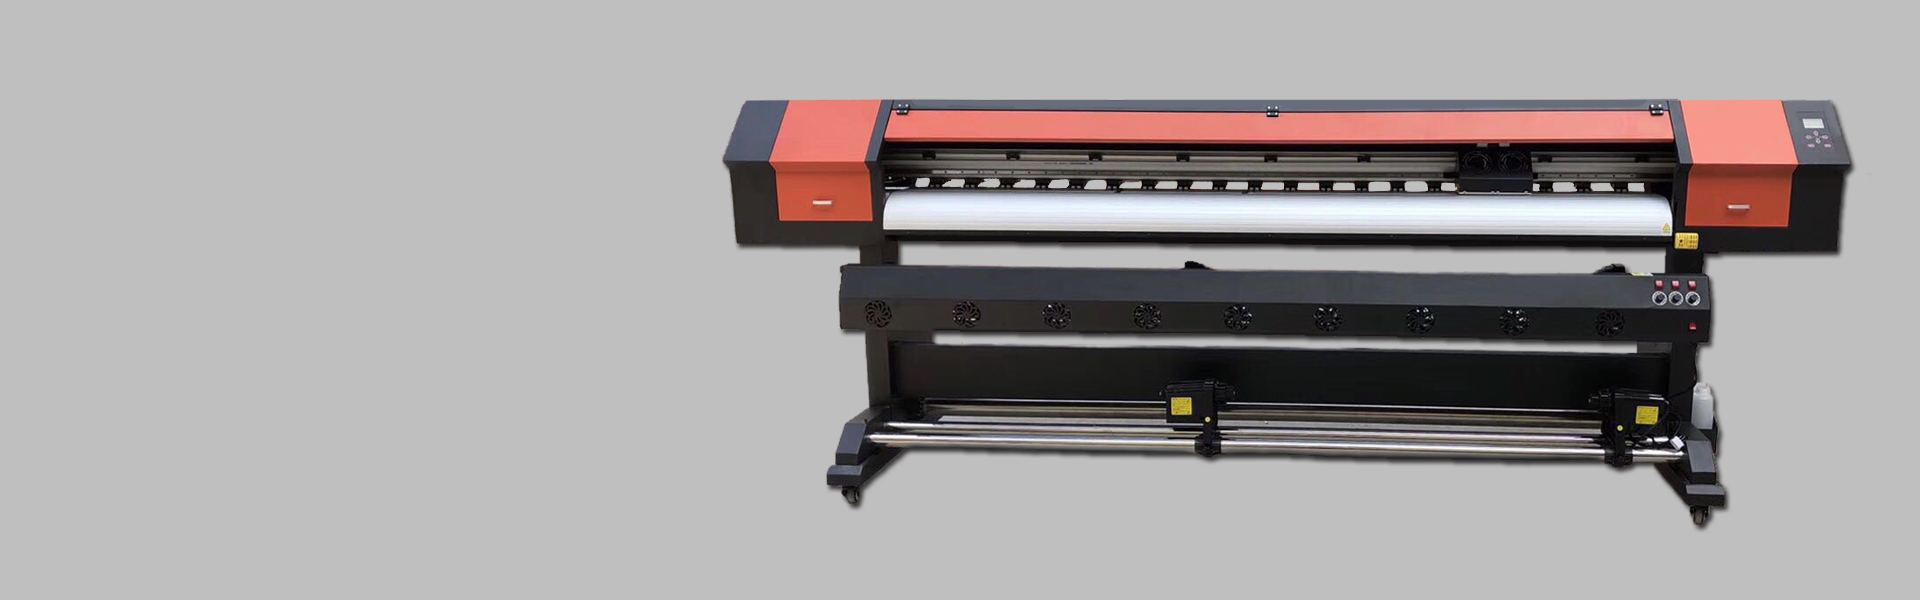 canvas printer